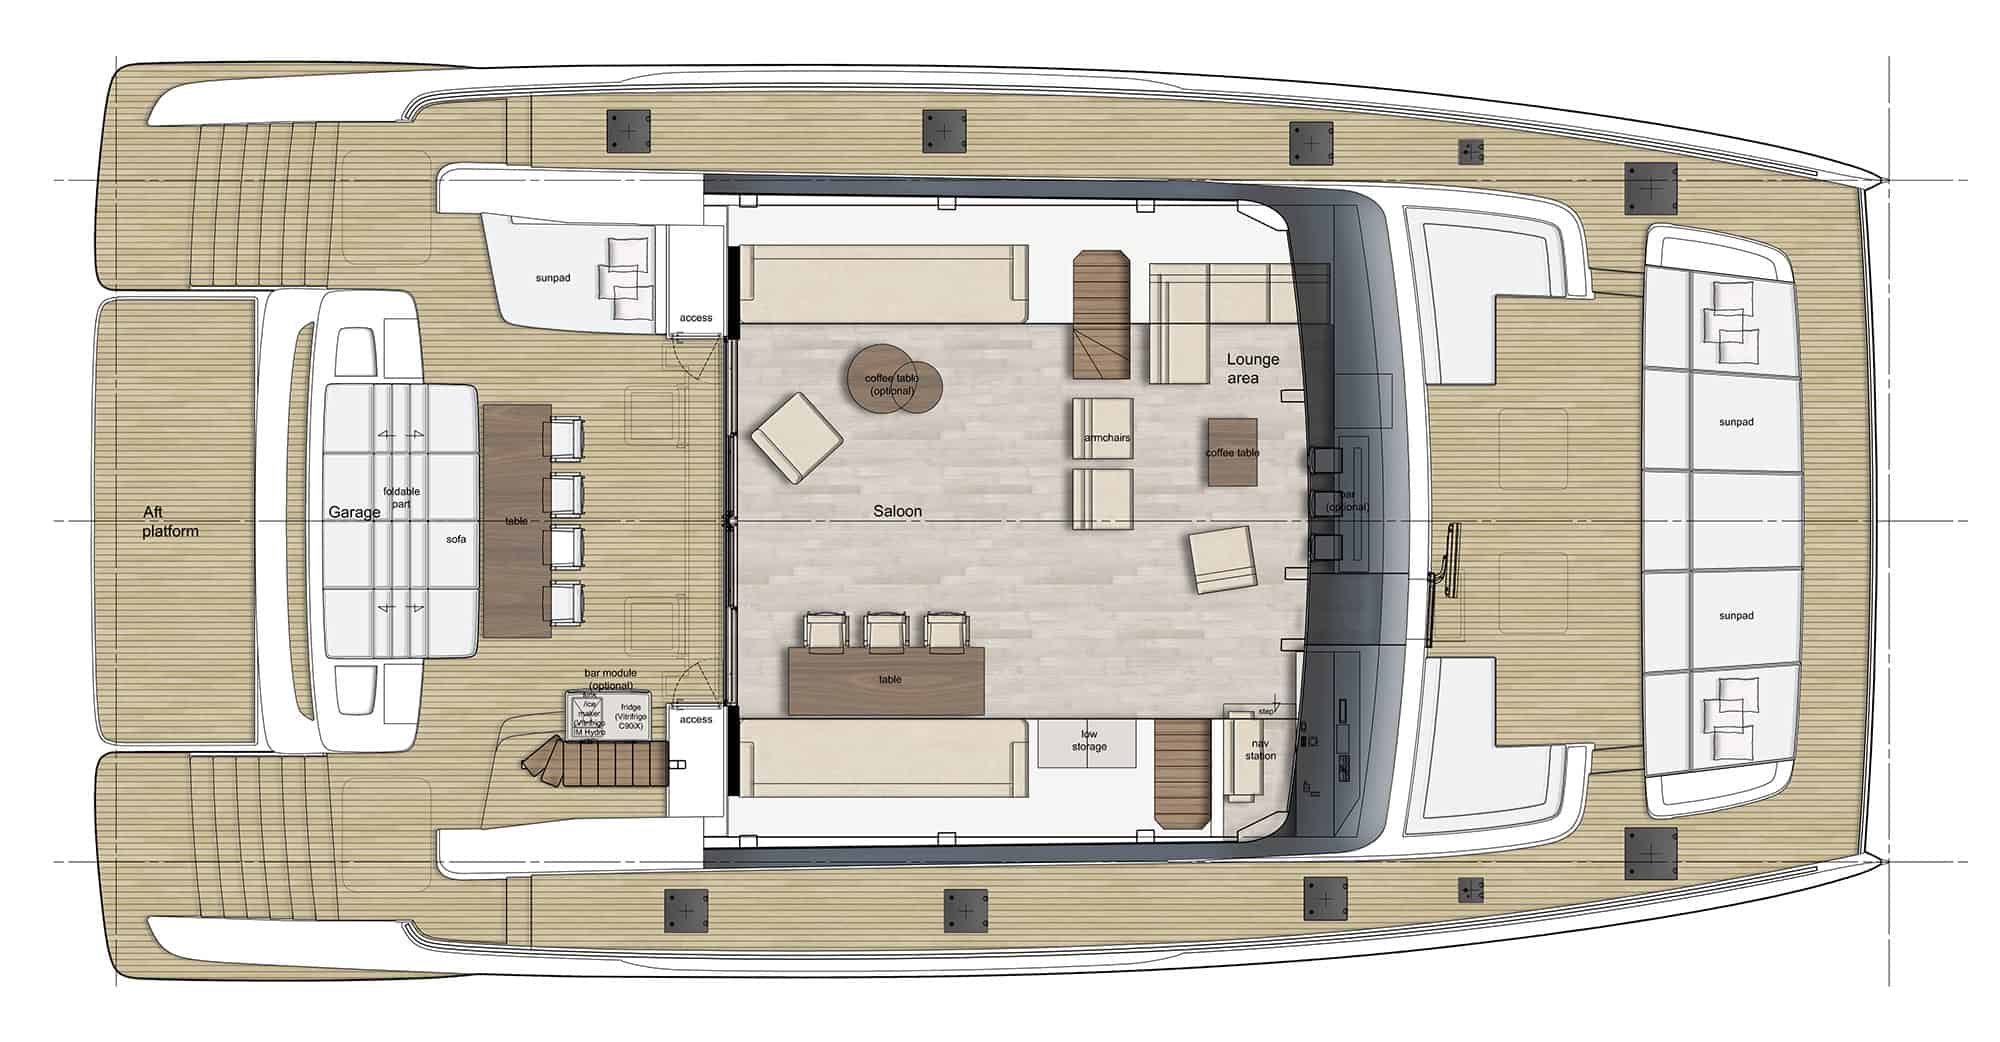 80 sunreef power deckhouse layout option 2